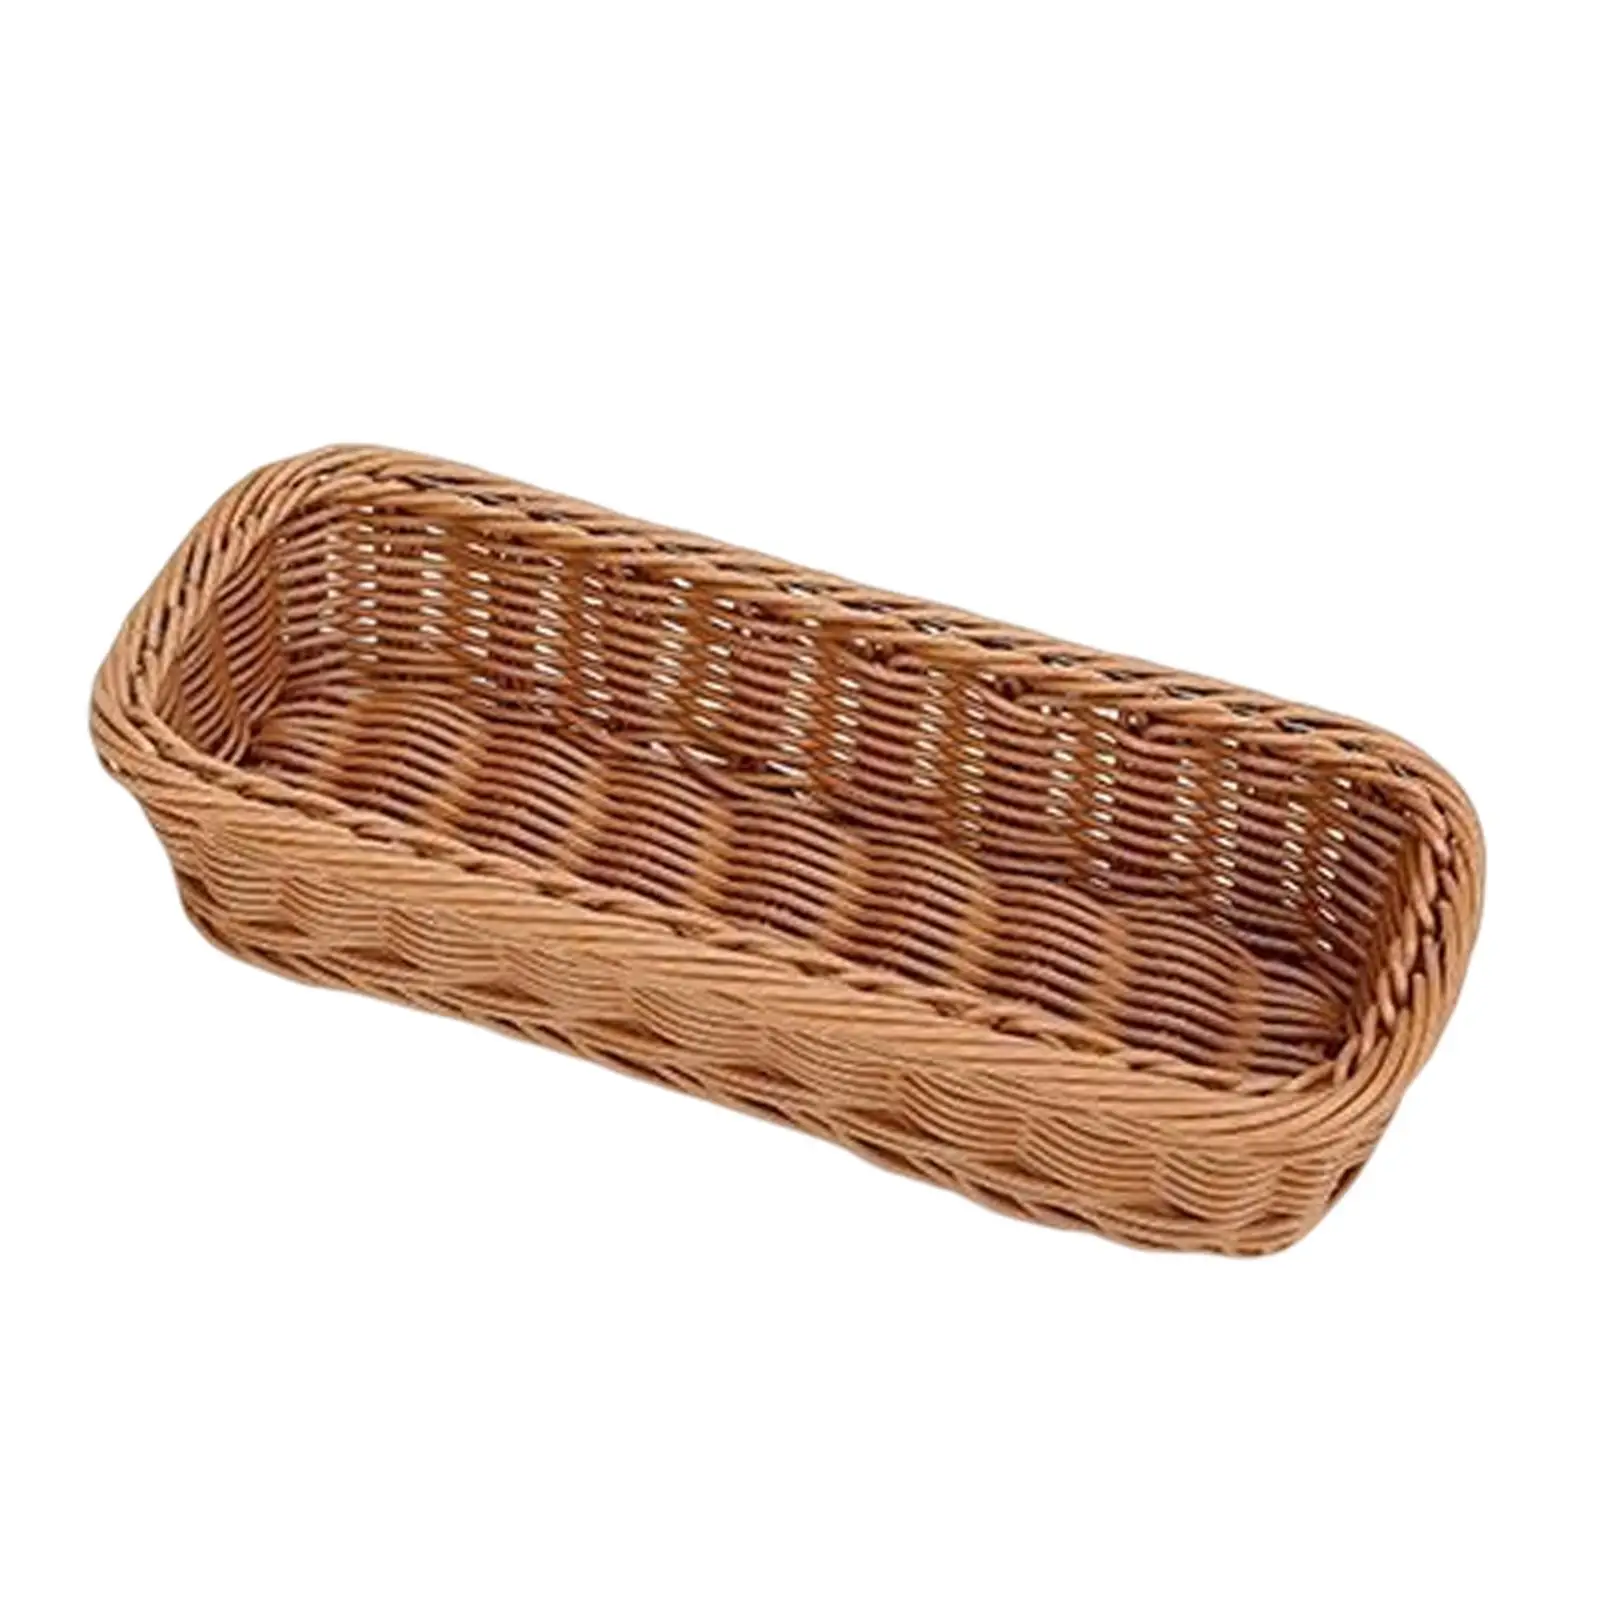 Woven Storage Baskets Handmade Bread Trays for Shelves Napkins Forks